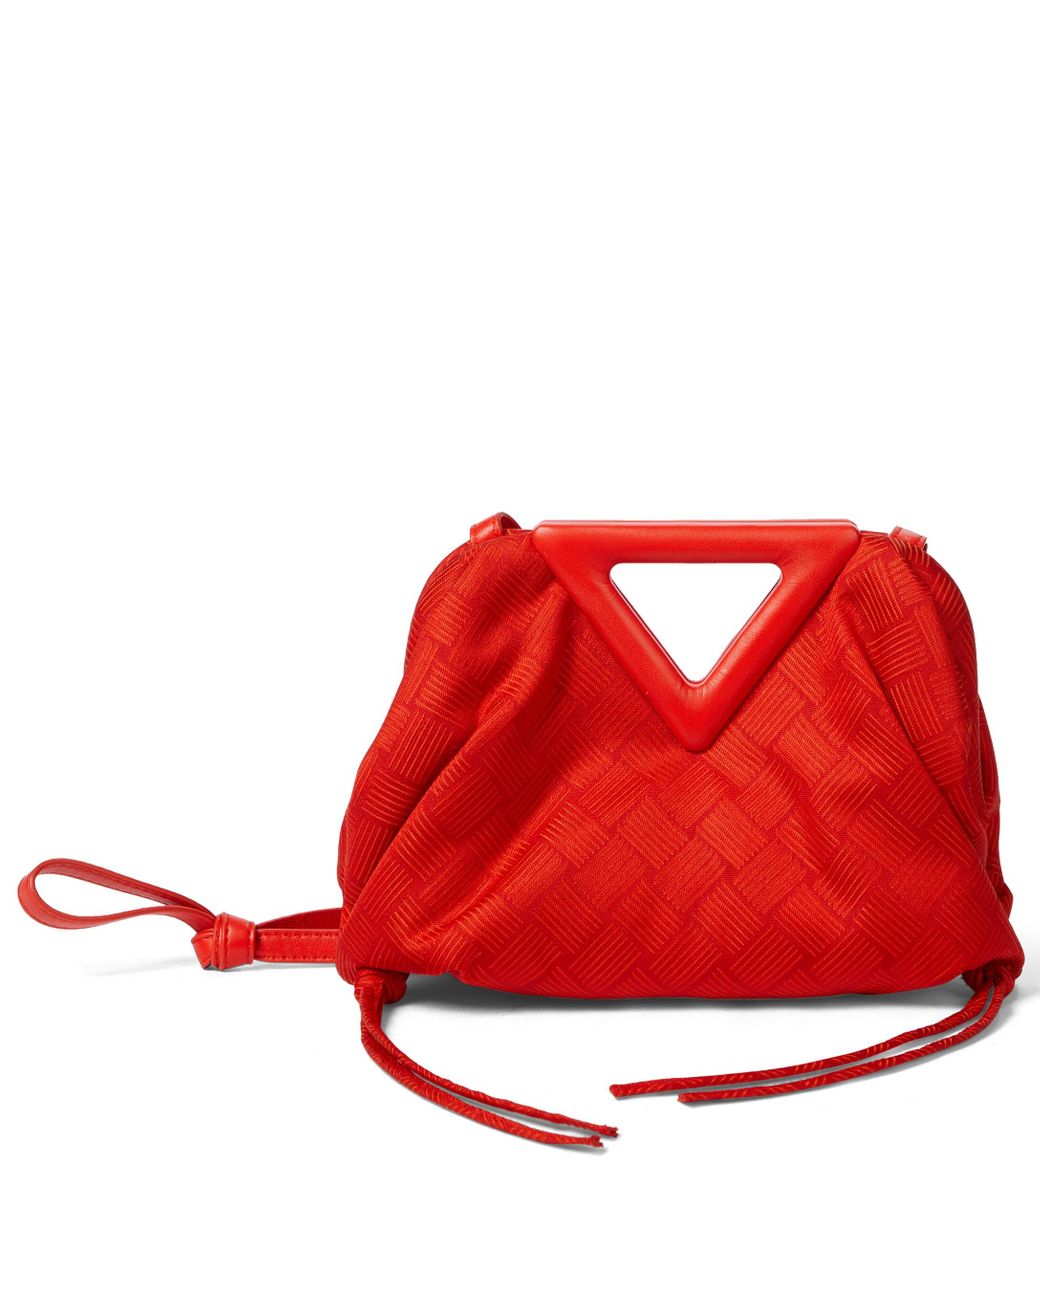 Bottega Veneta Point Small Jacquard Shoulder Bag in Red - Lyst